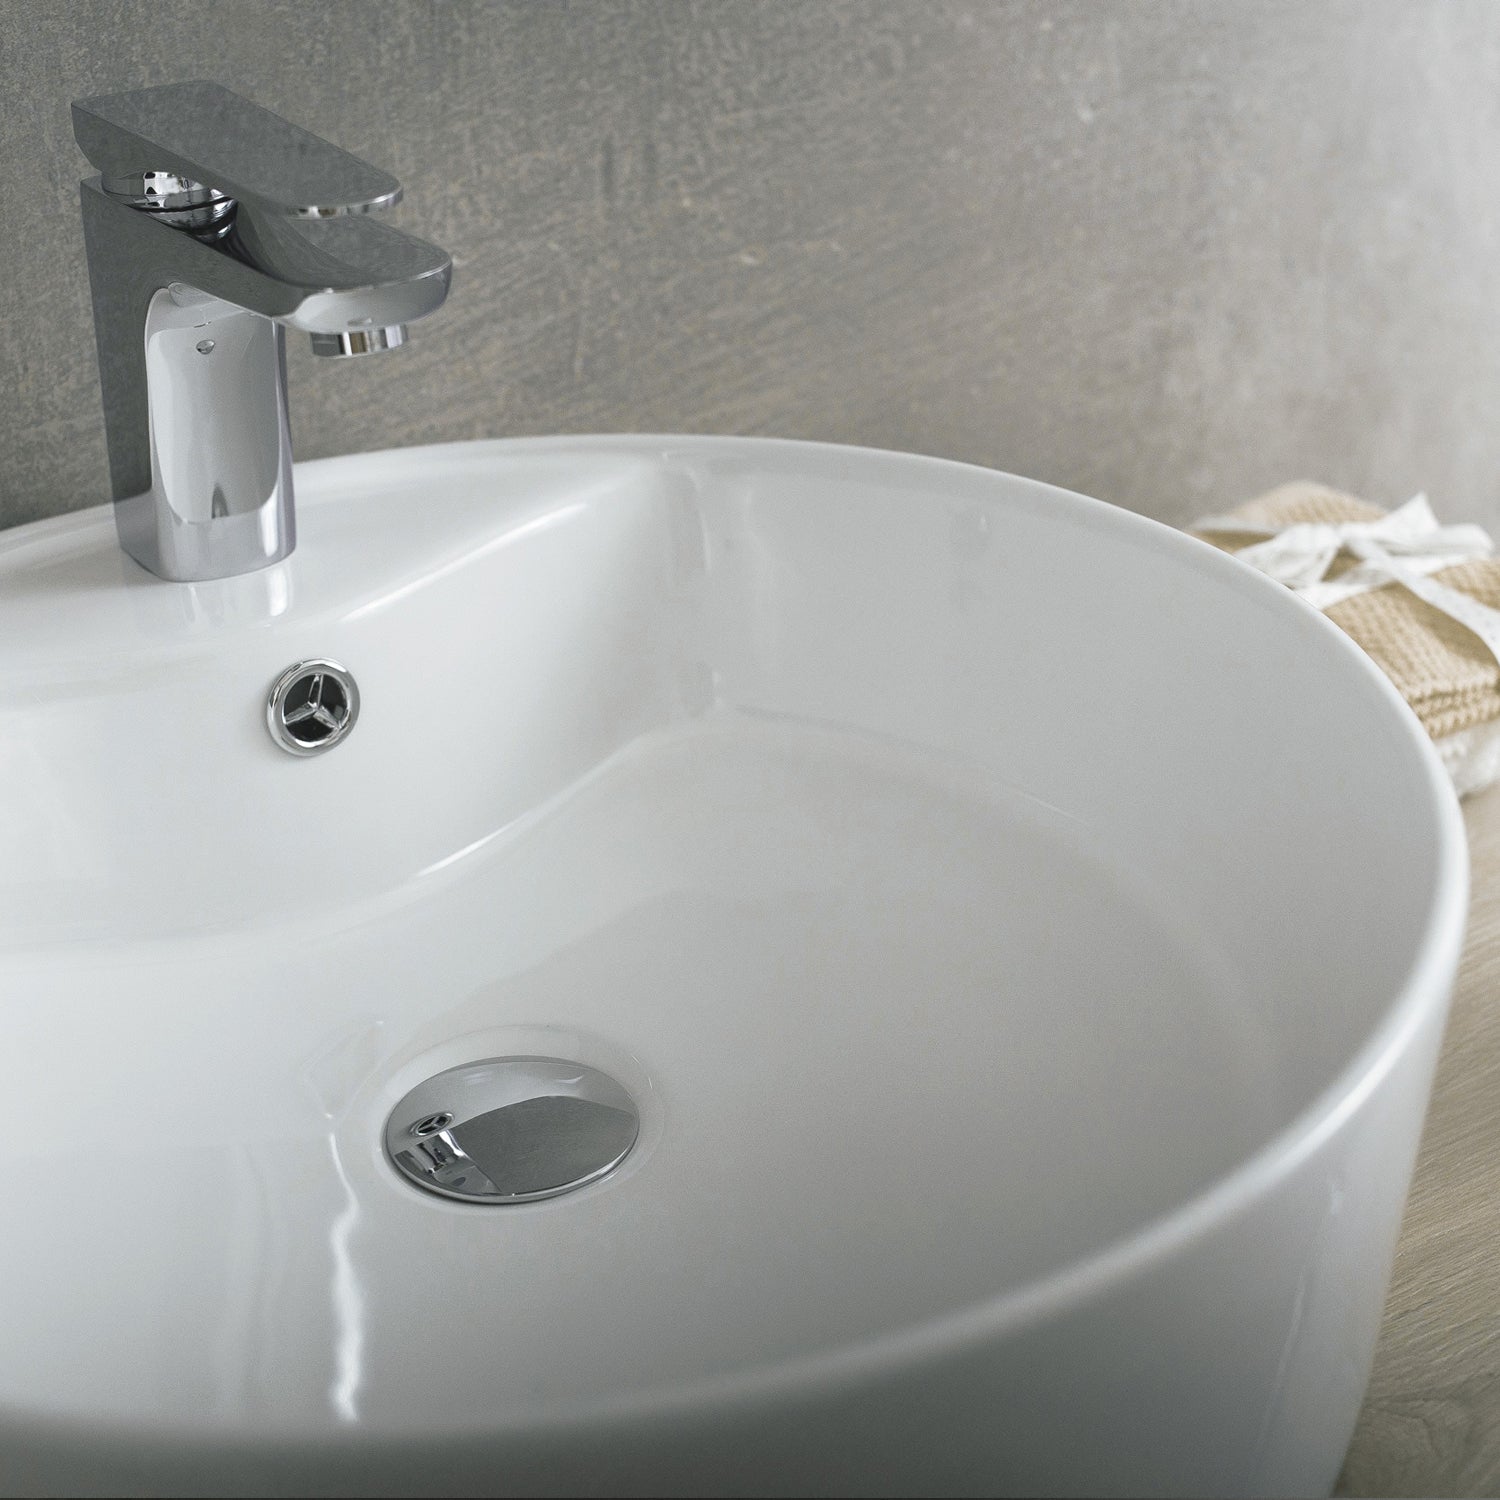 DAX Ceramic Round Single Bowl Bathroom Vessel Sink, White Finish, 18-5/16 x 5-15/16 x 18-5/16 Inches (BSN-222-A)